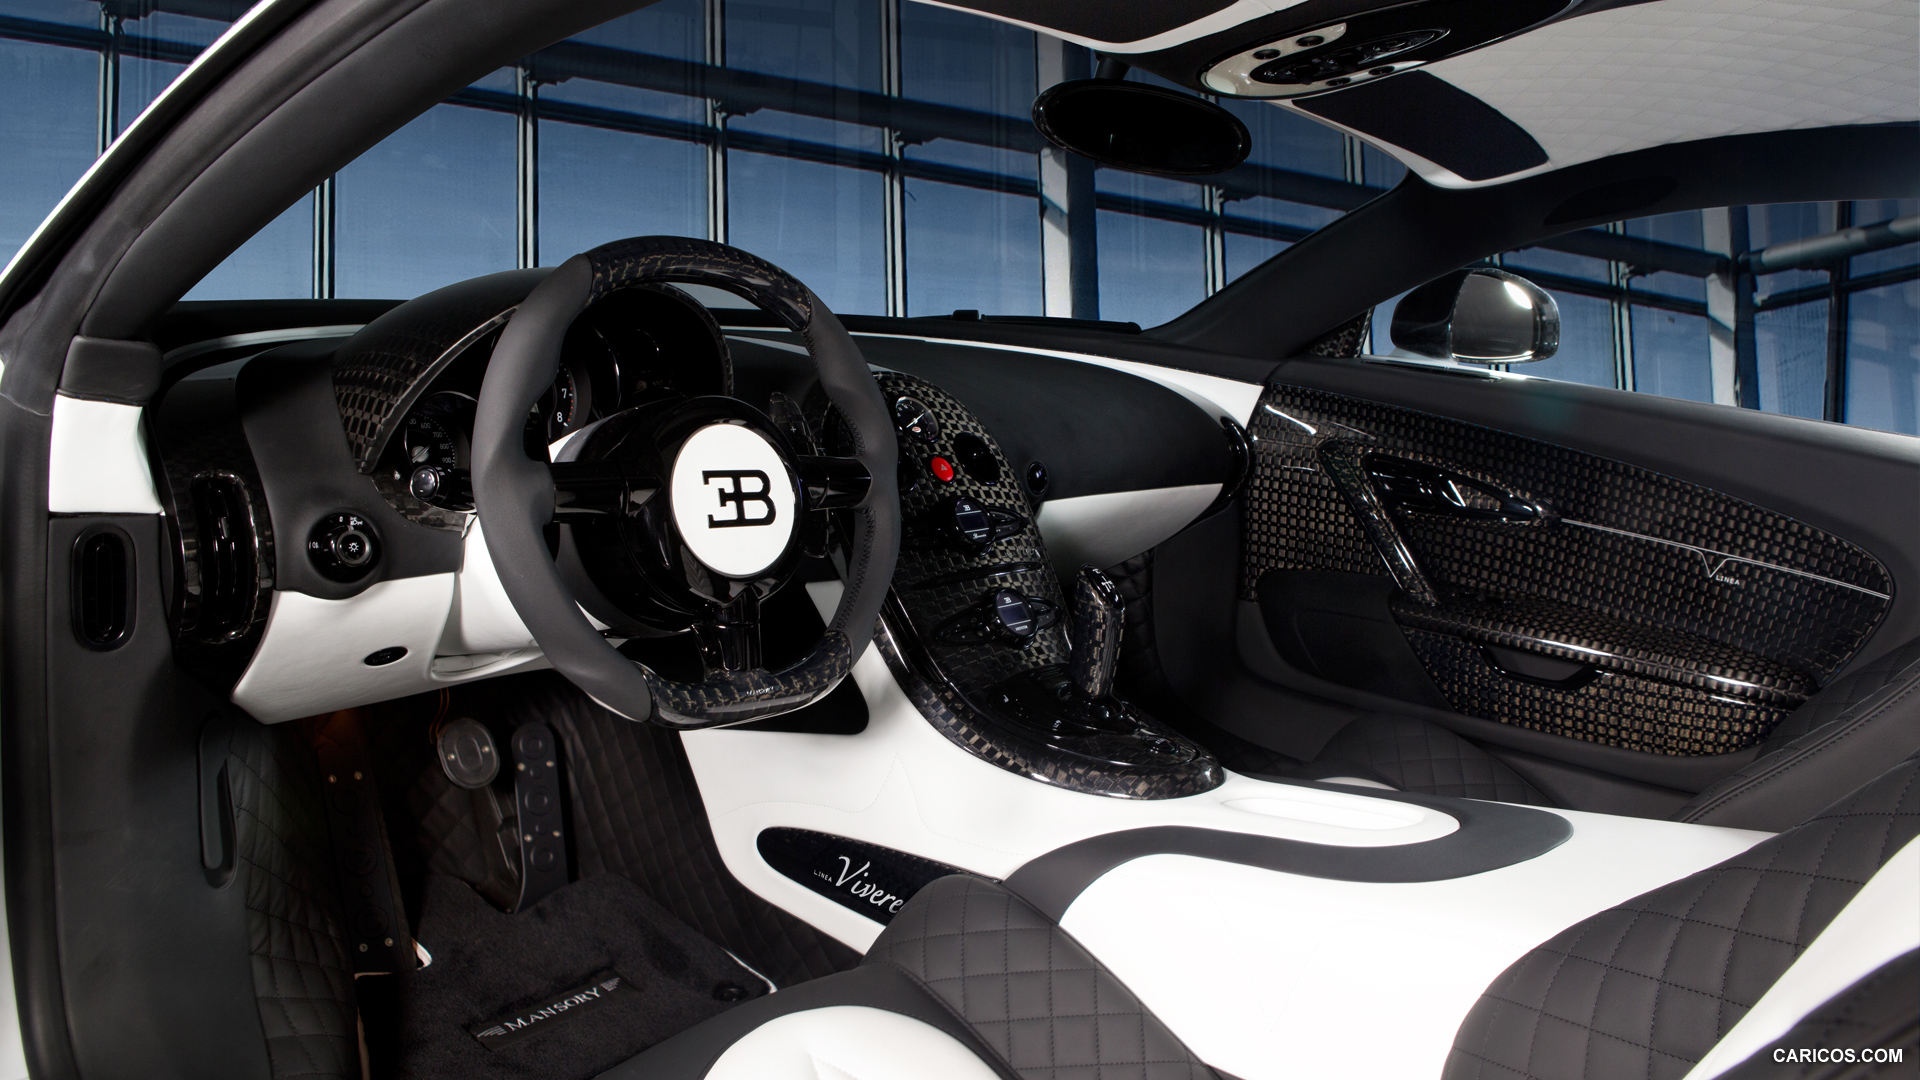 2014 Mansory Vivere based on Bugatti Veyron 16.4  - Interior, #4 of 8